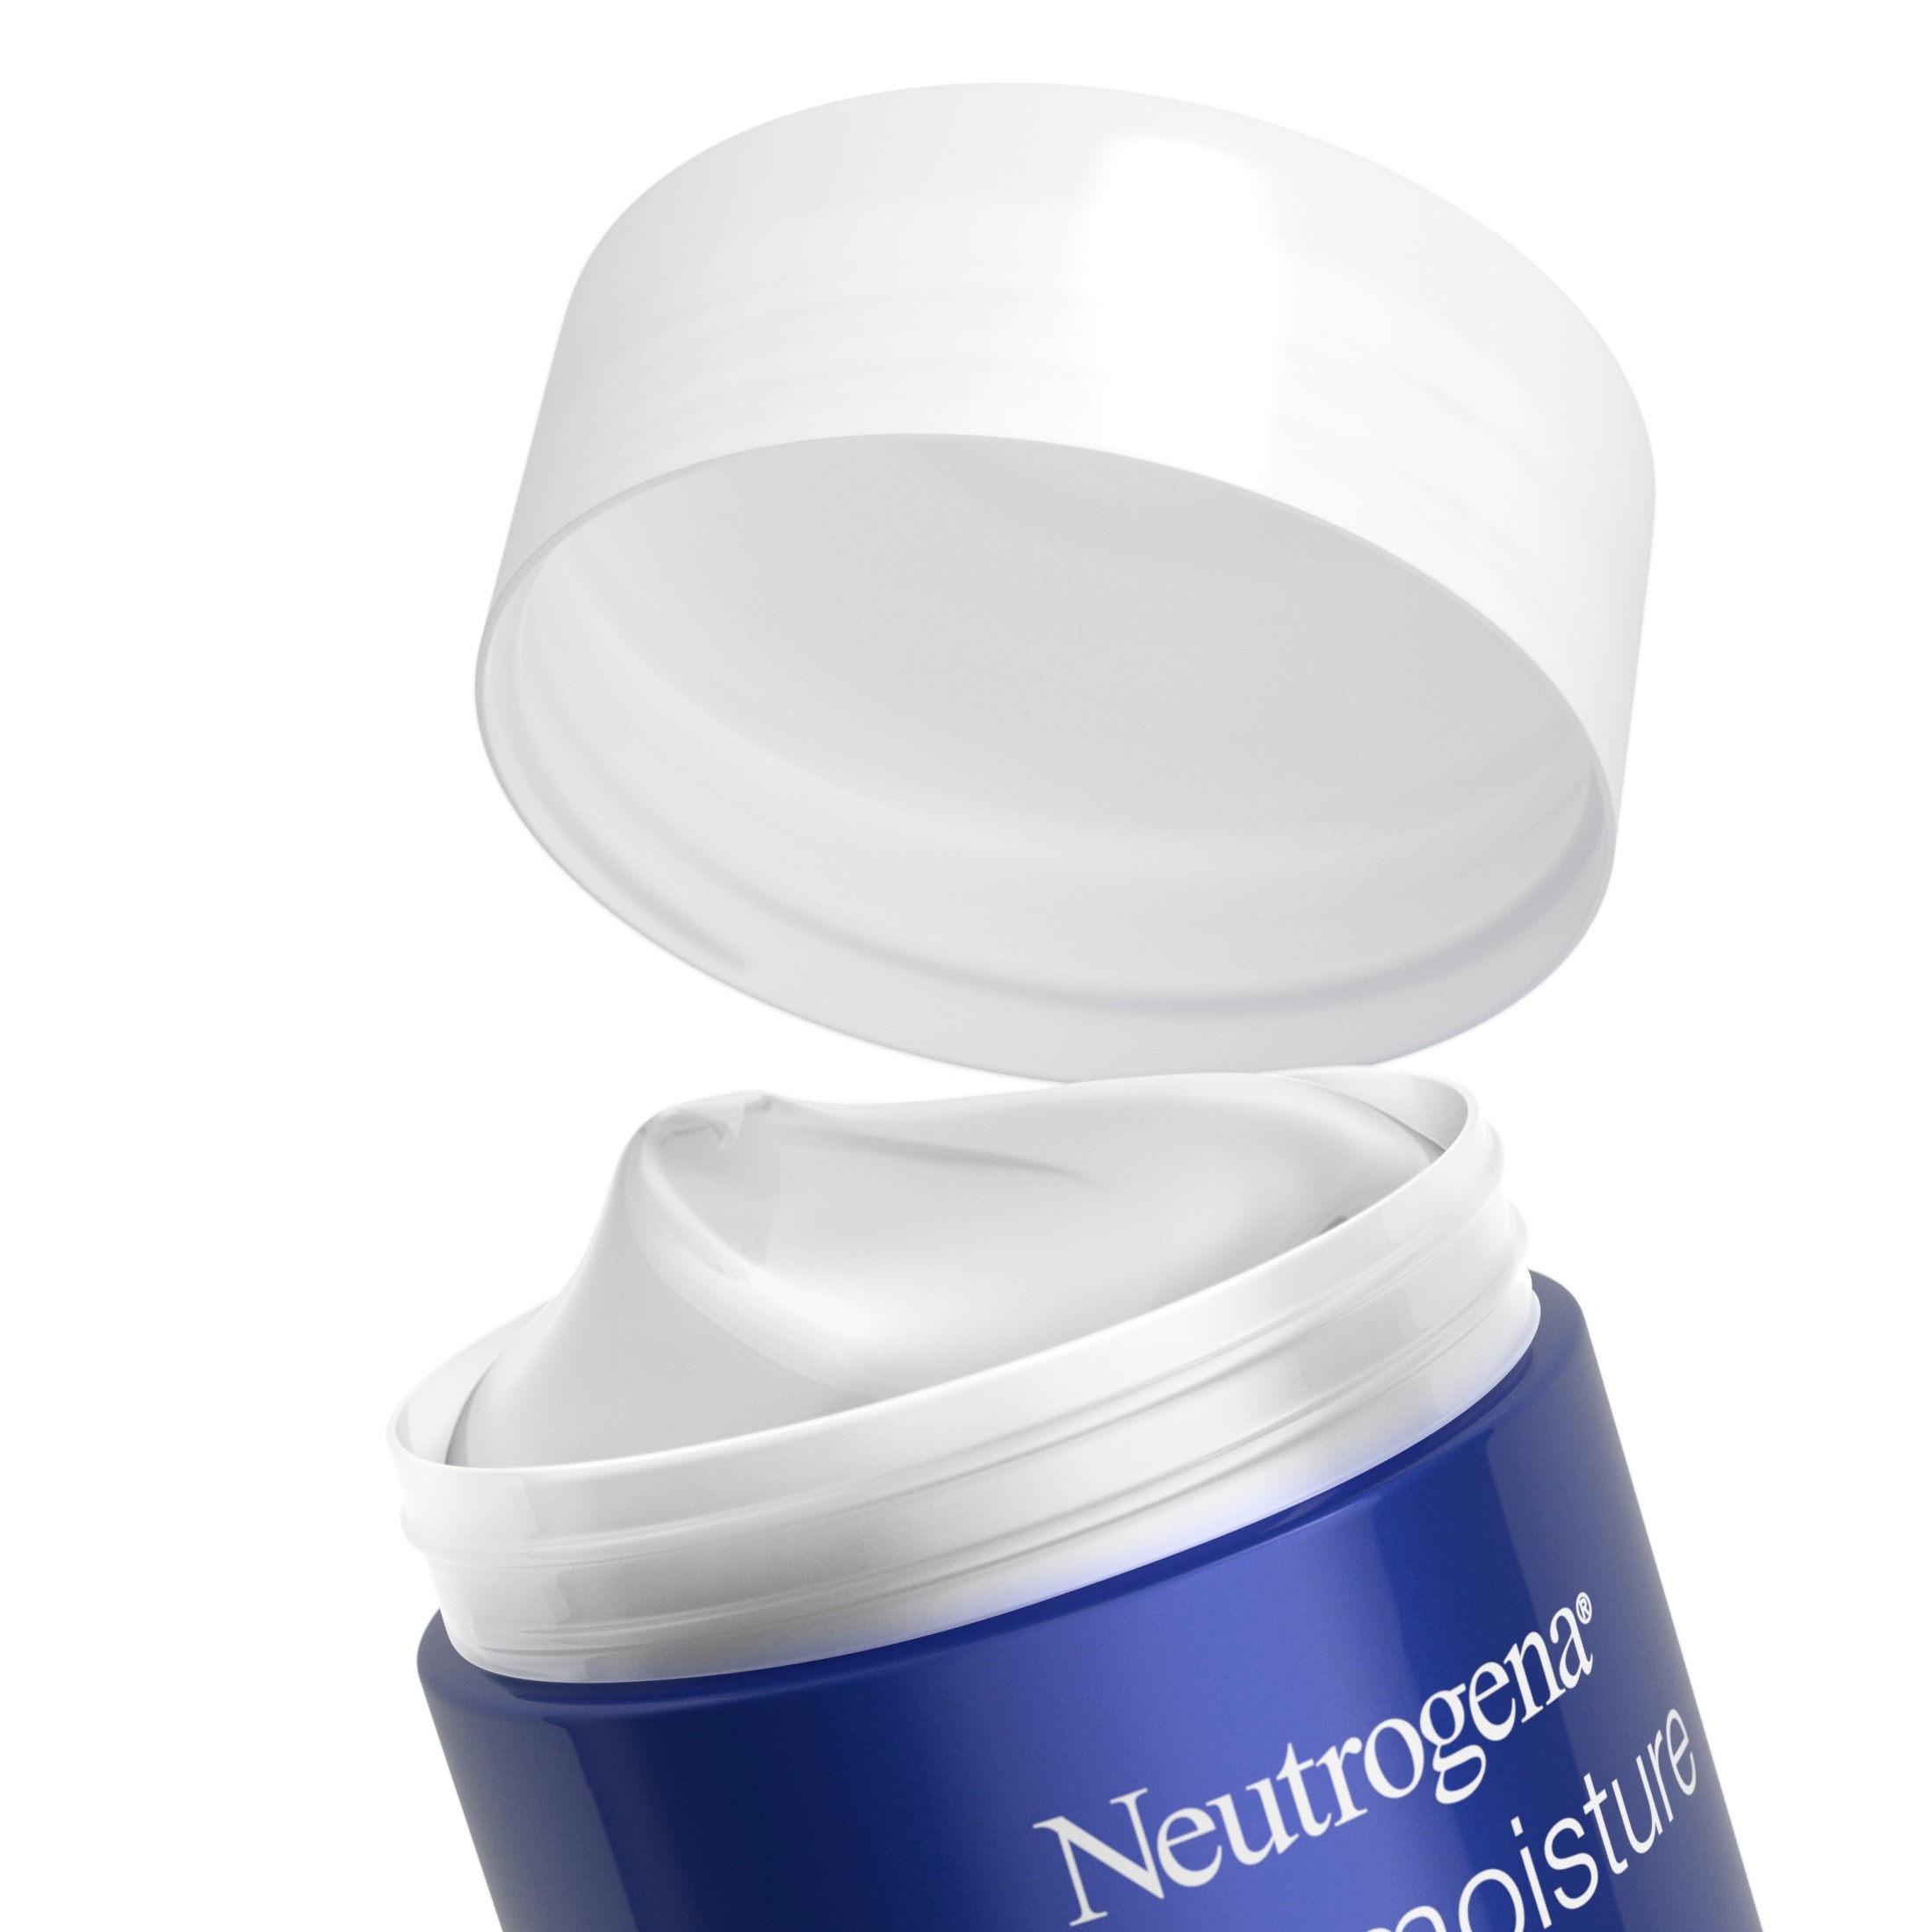 Neutrogena Deep Moisture Night Face & Neck Cream Moisturizer, 2.25 oz - image 5 of 10